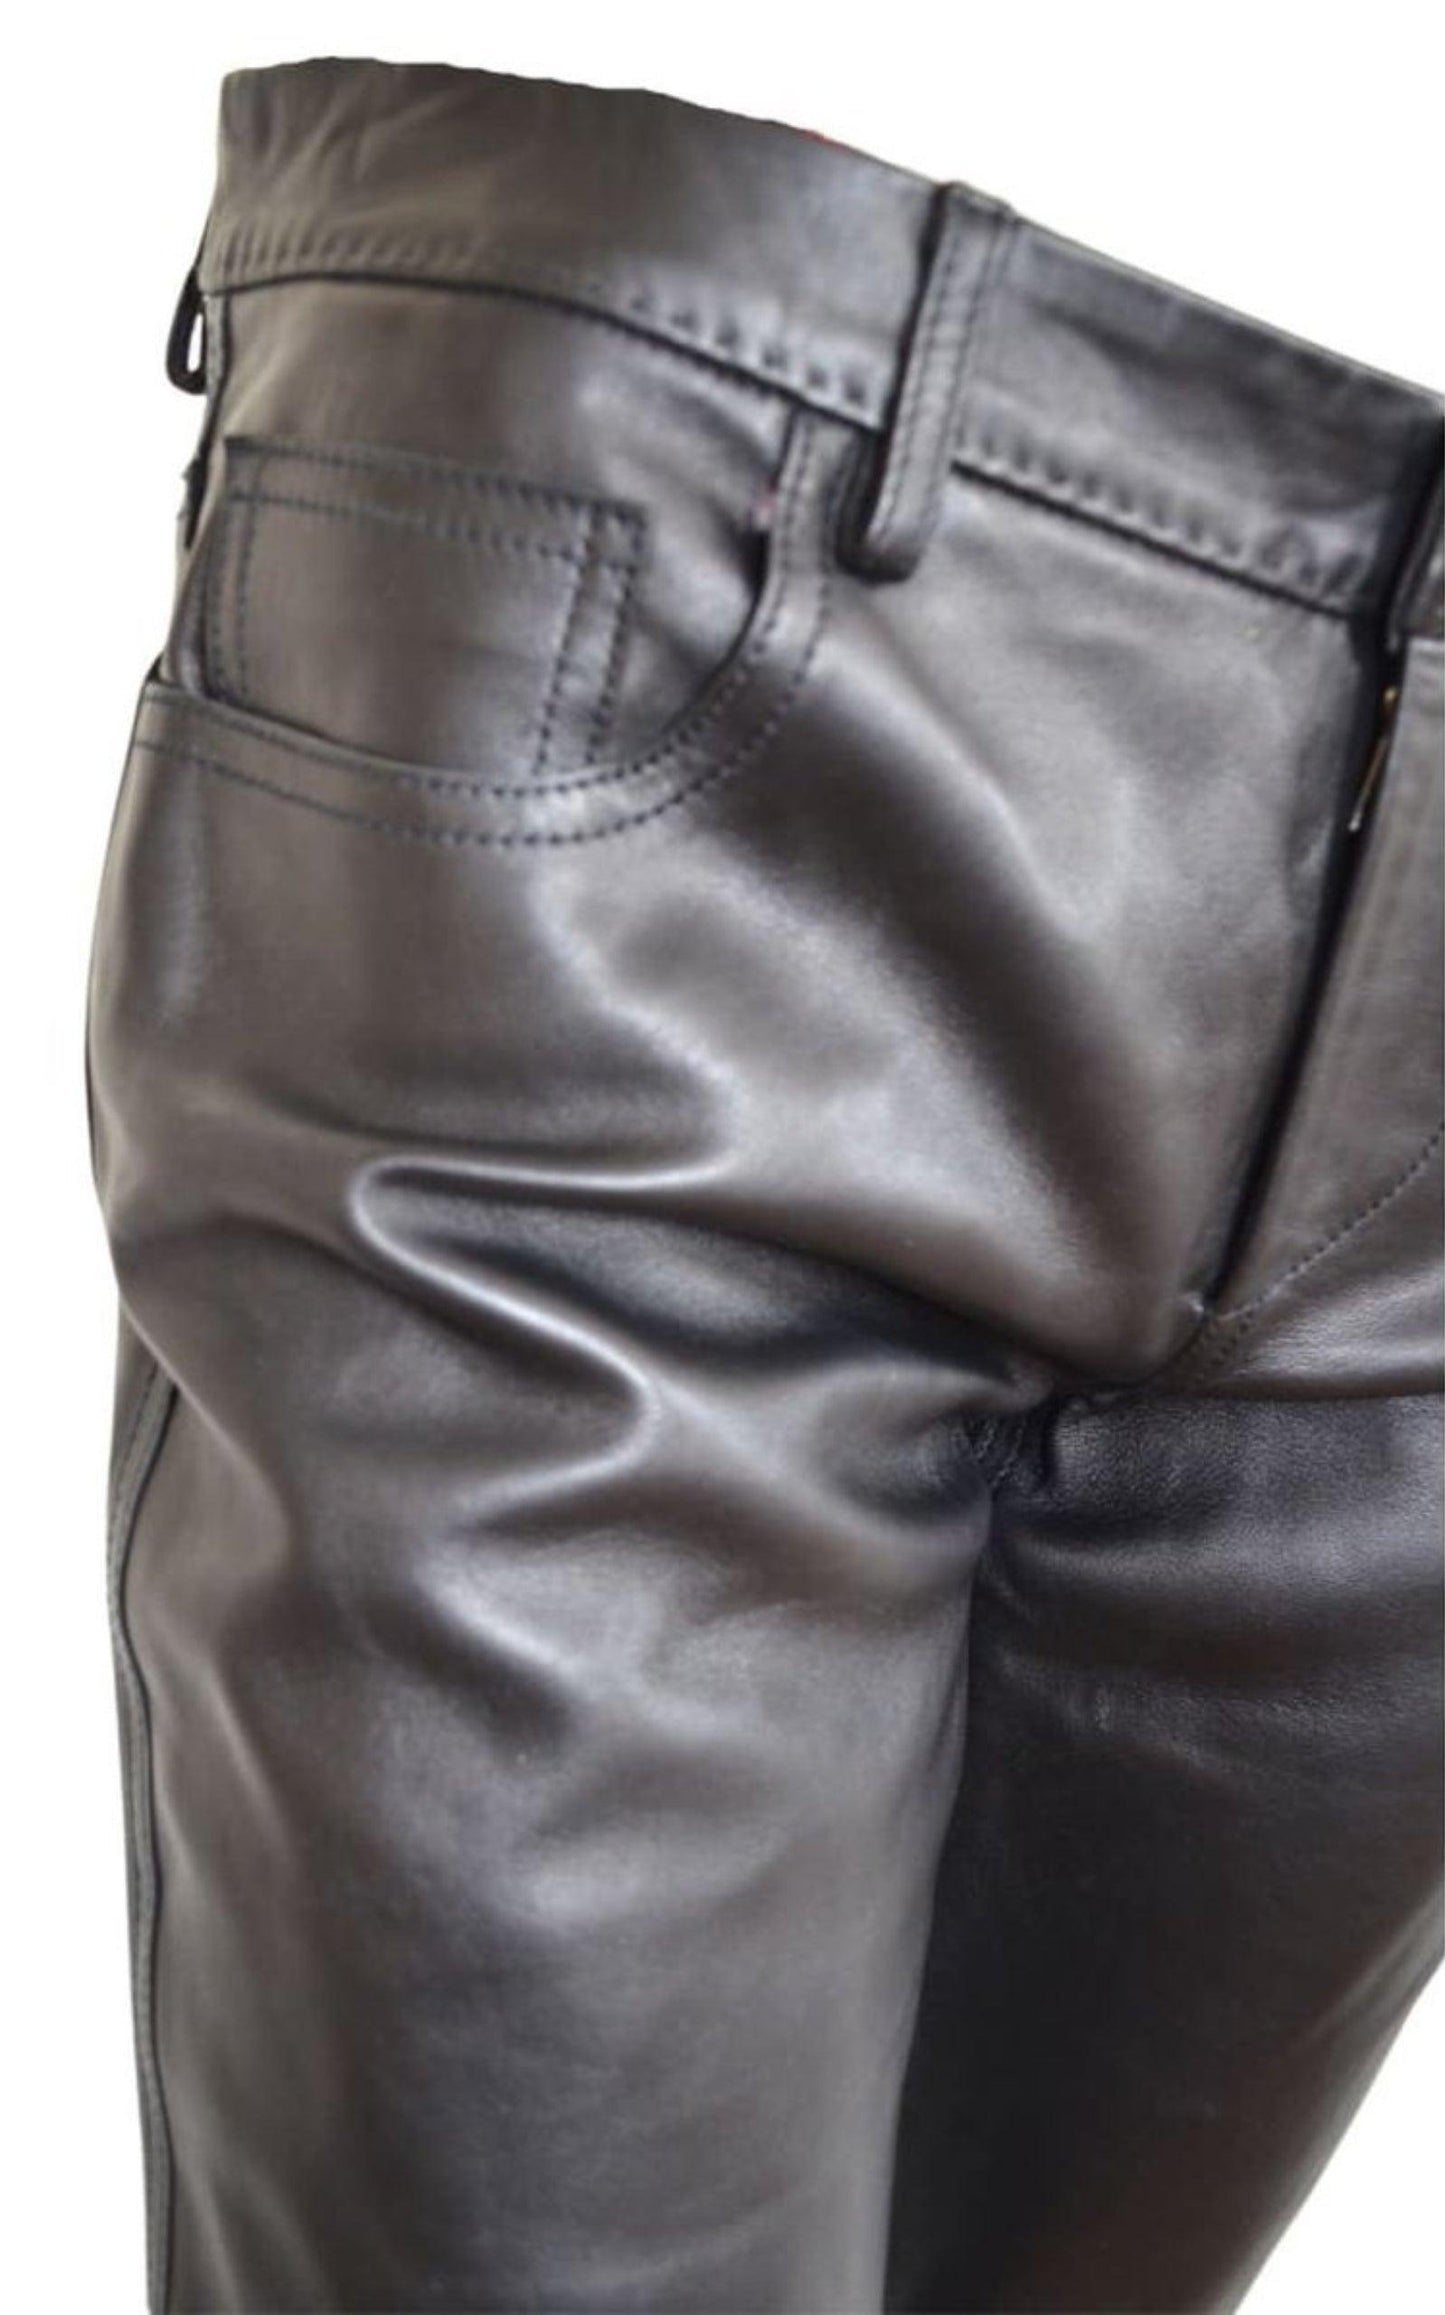  Costume NationalStraight Leg Just Leather Biker Pants - Runway Catalog